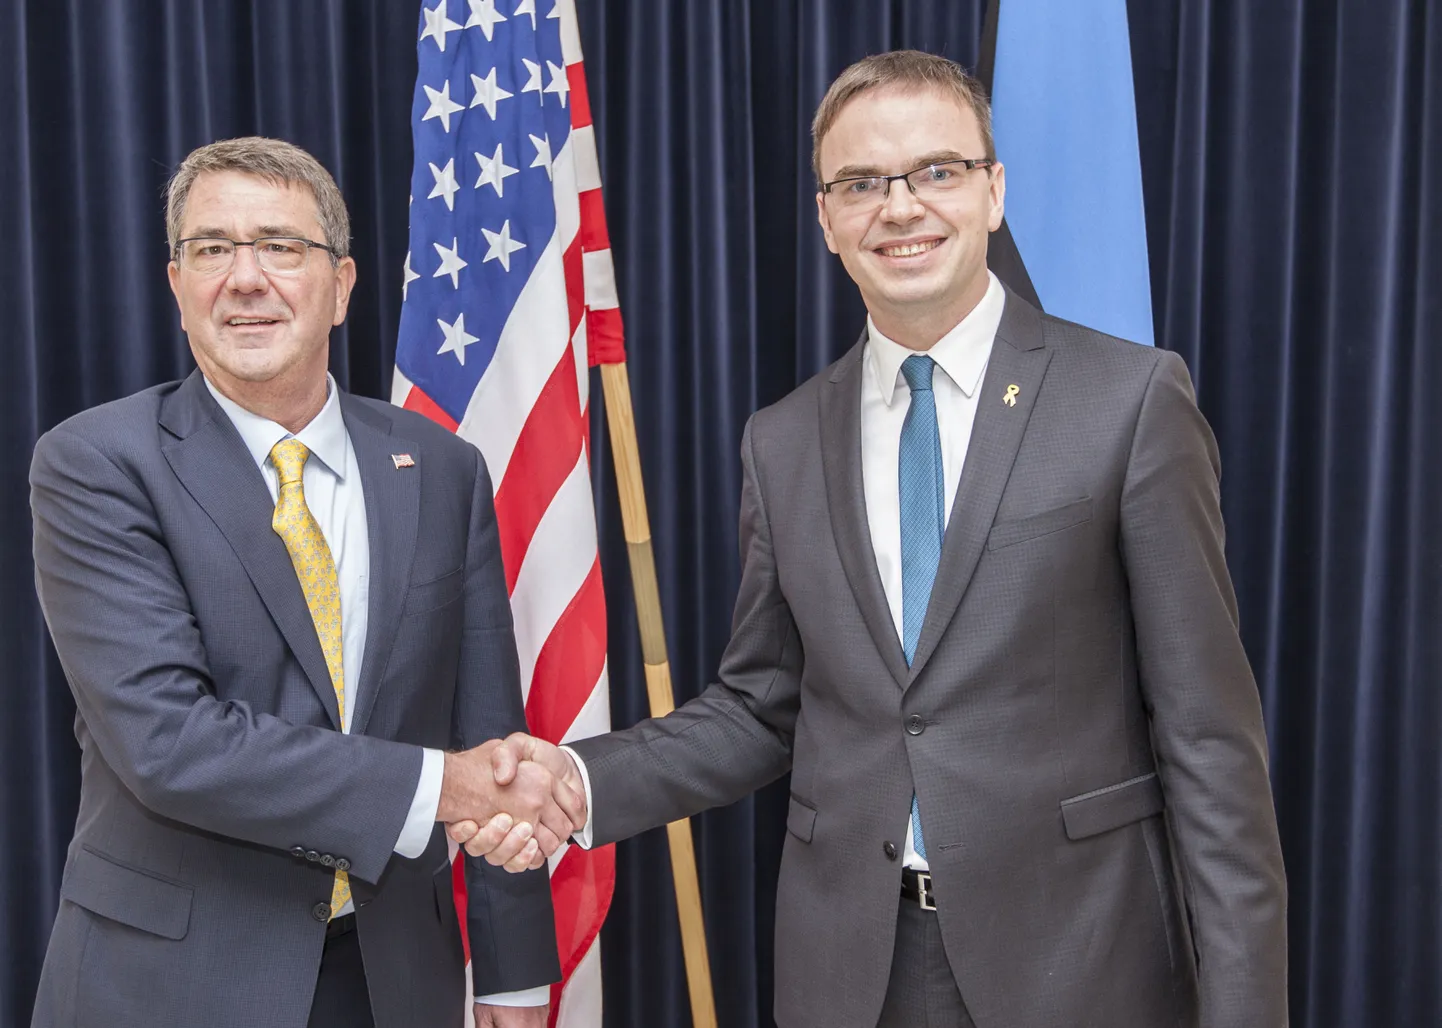 Ameerika Ühendriikide kaitseminister Ashton Carter ja kaitseminister Sven Mikser.